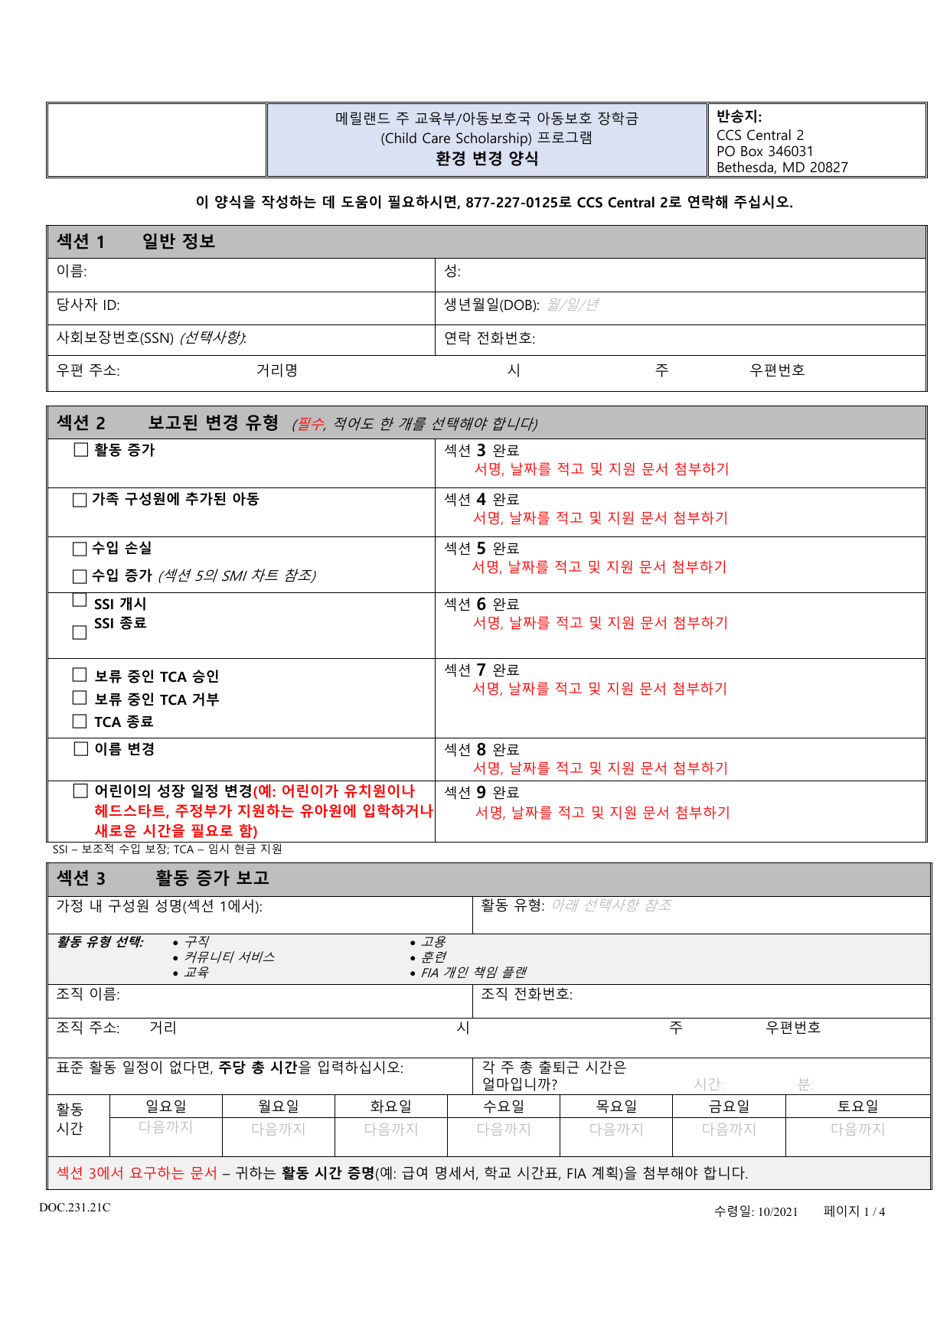 Form DOC.231.21C Circumstance Change Form - Maryland (Korean), Page 1